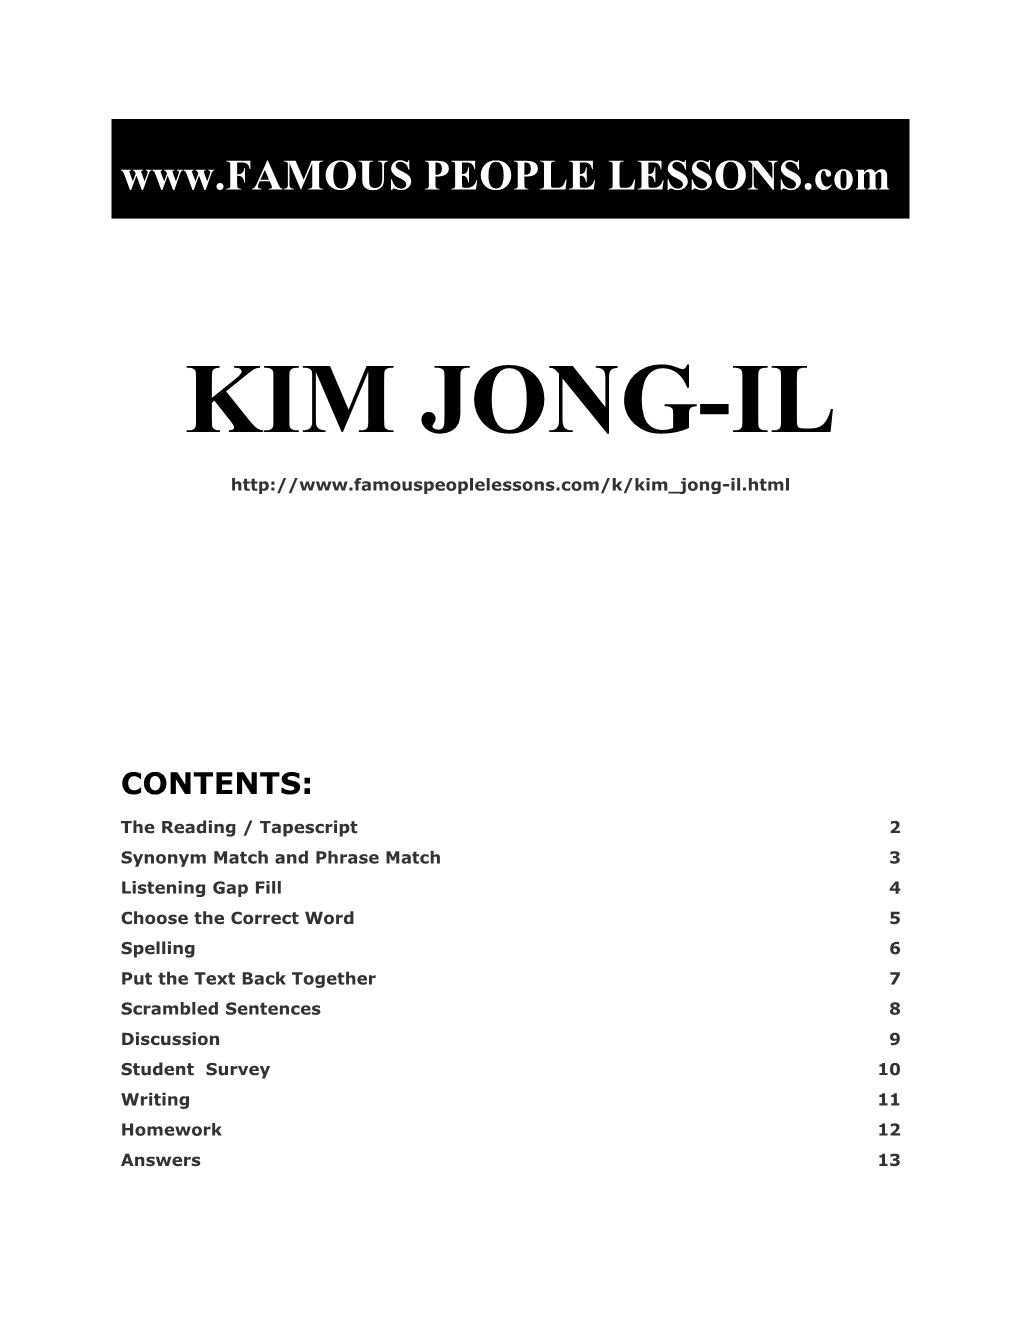 Famous People Lessons - Kim Jong-Il